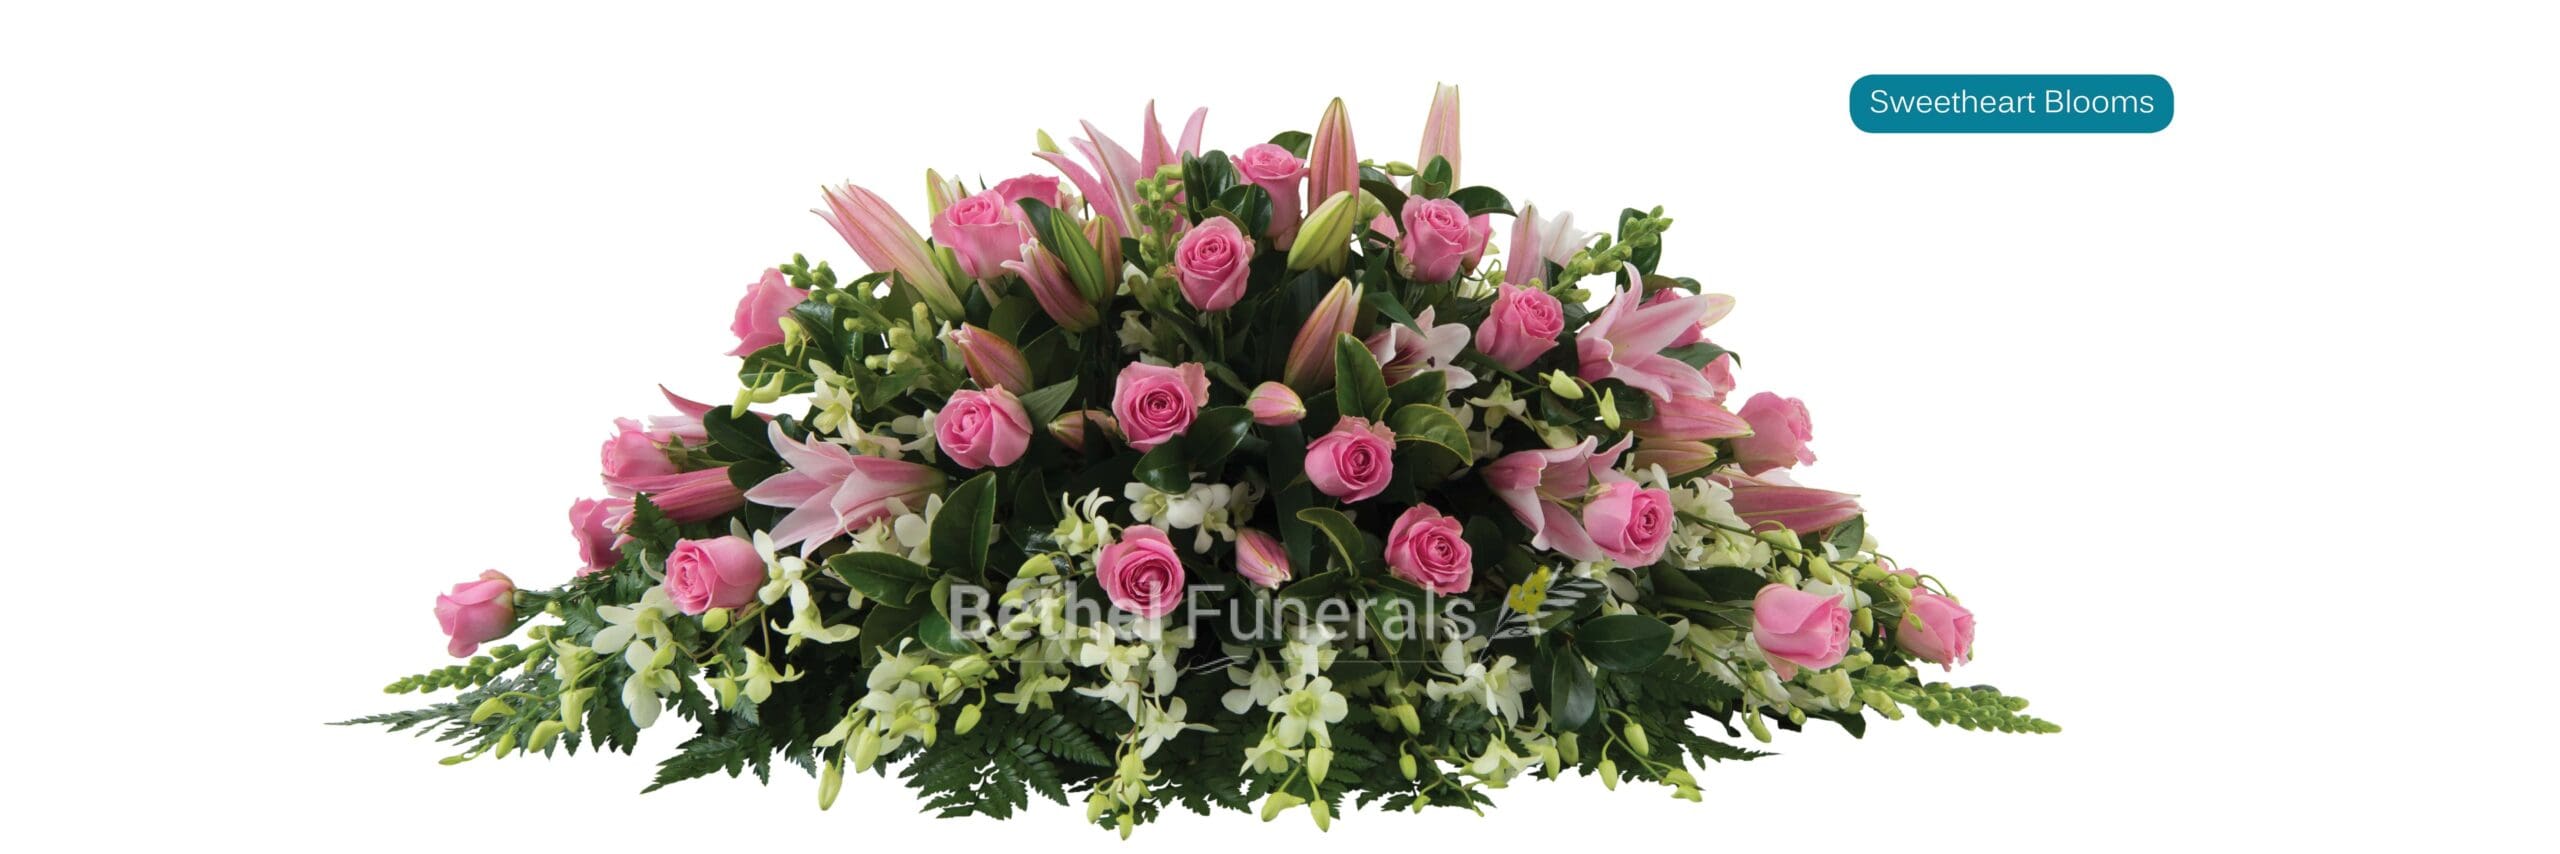 sweetheart blooms funeral flowers